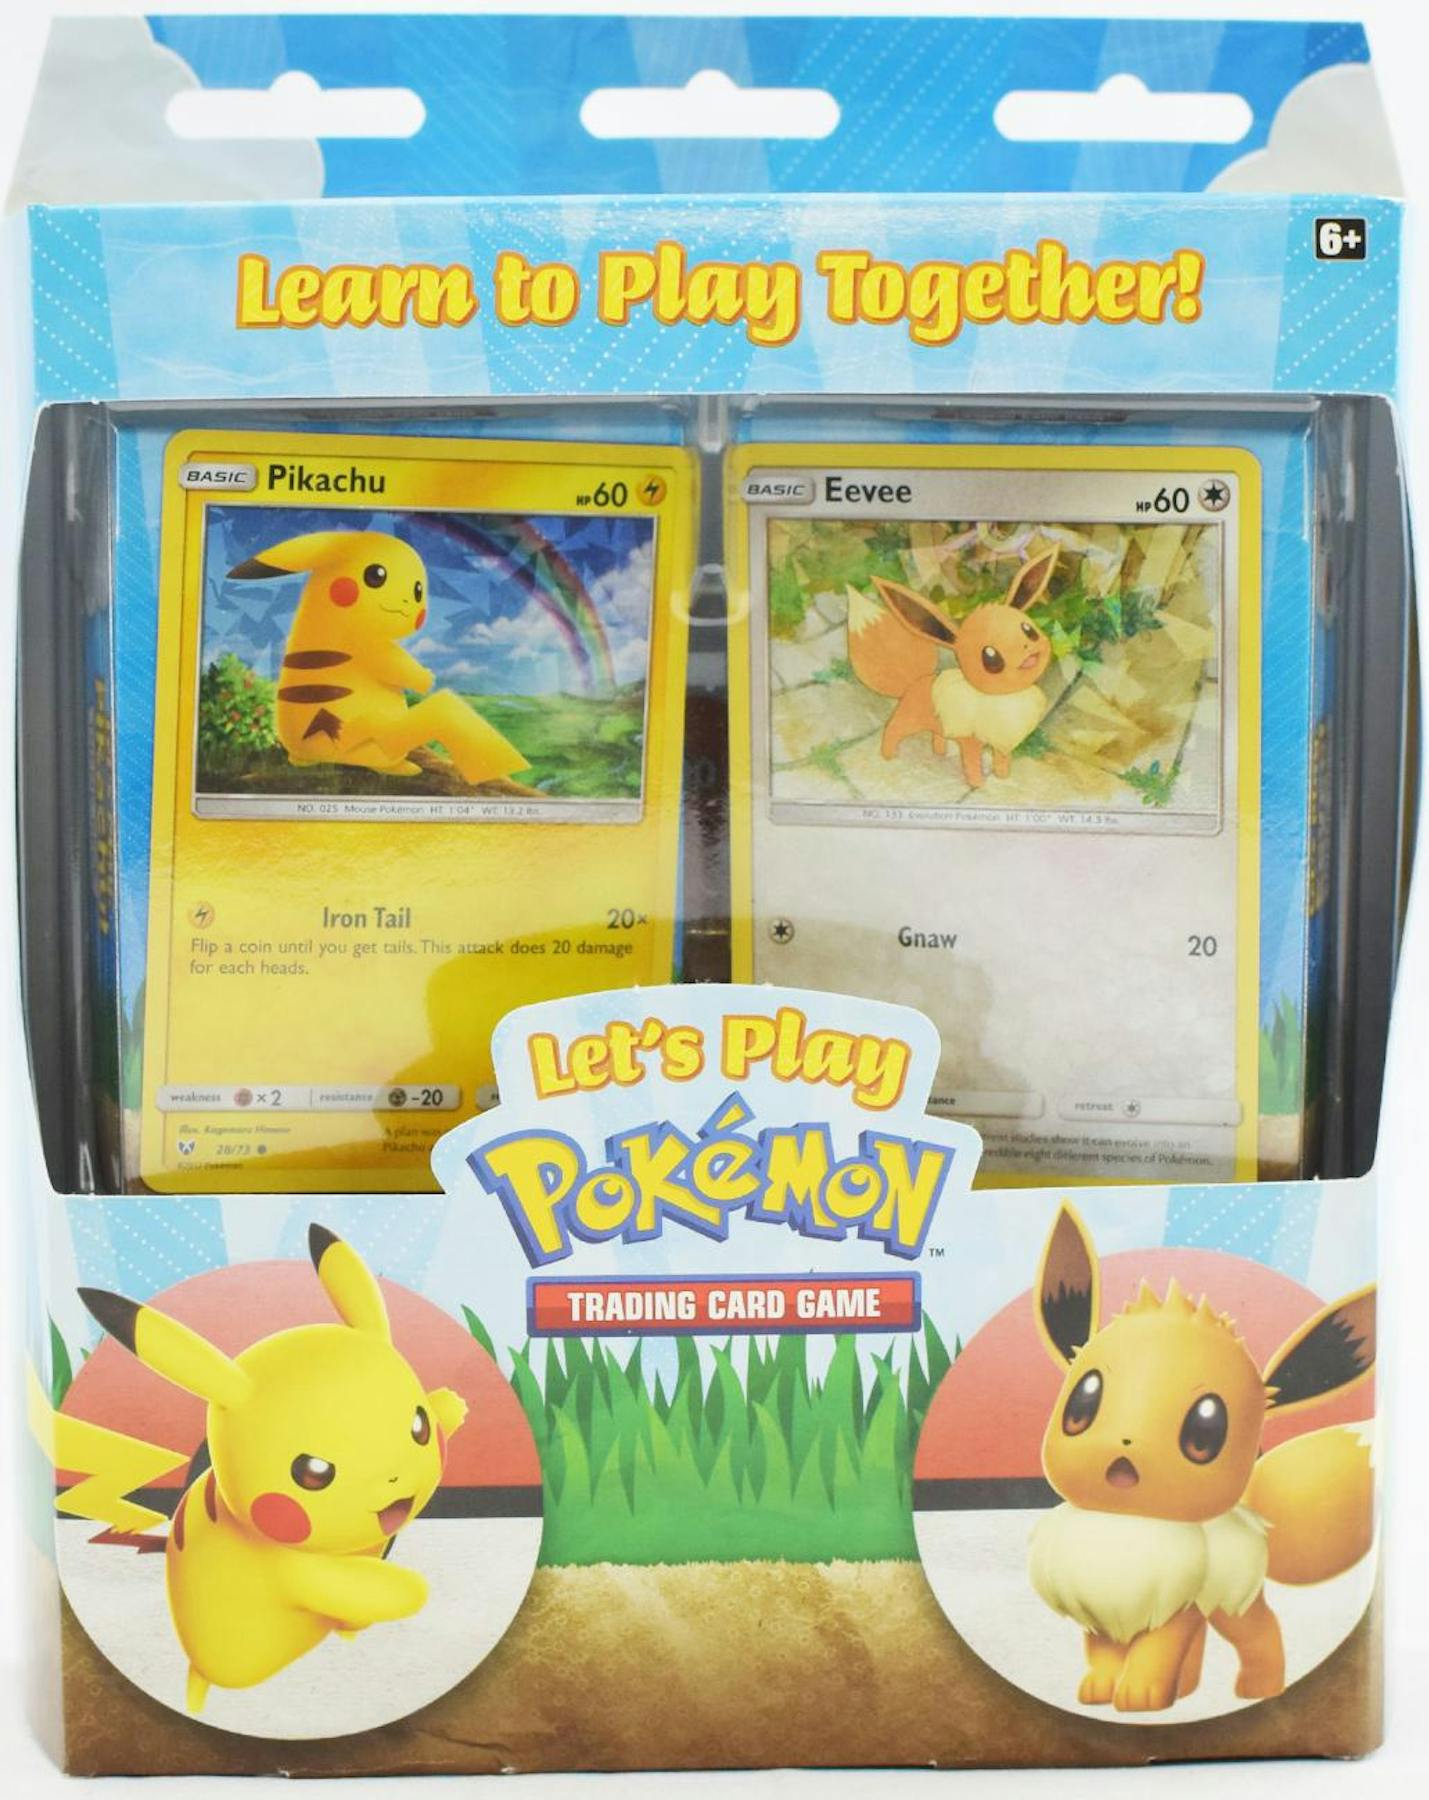 Pokemon TCG: Let's Play , Eevee Theme Deck -  - Pokémon TCG  & Accessories